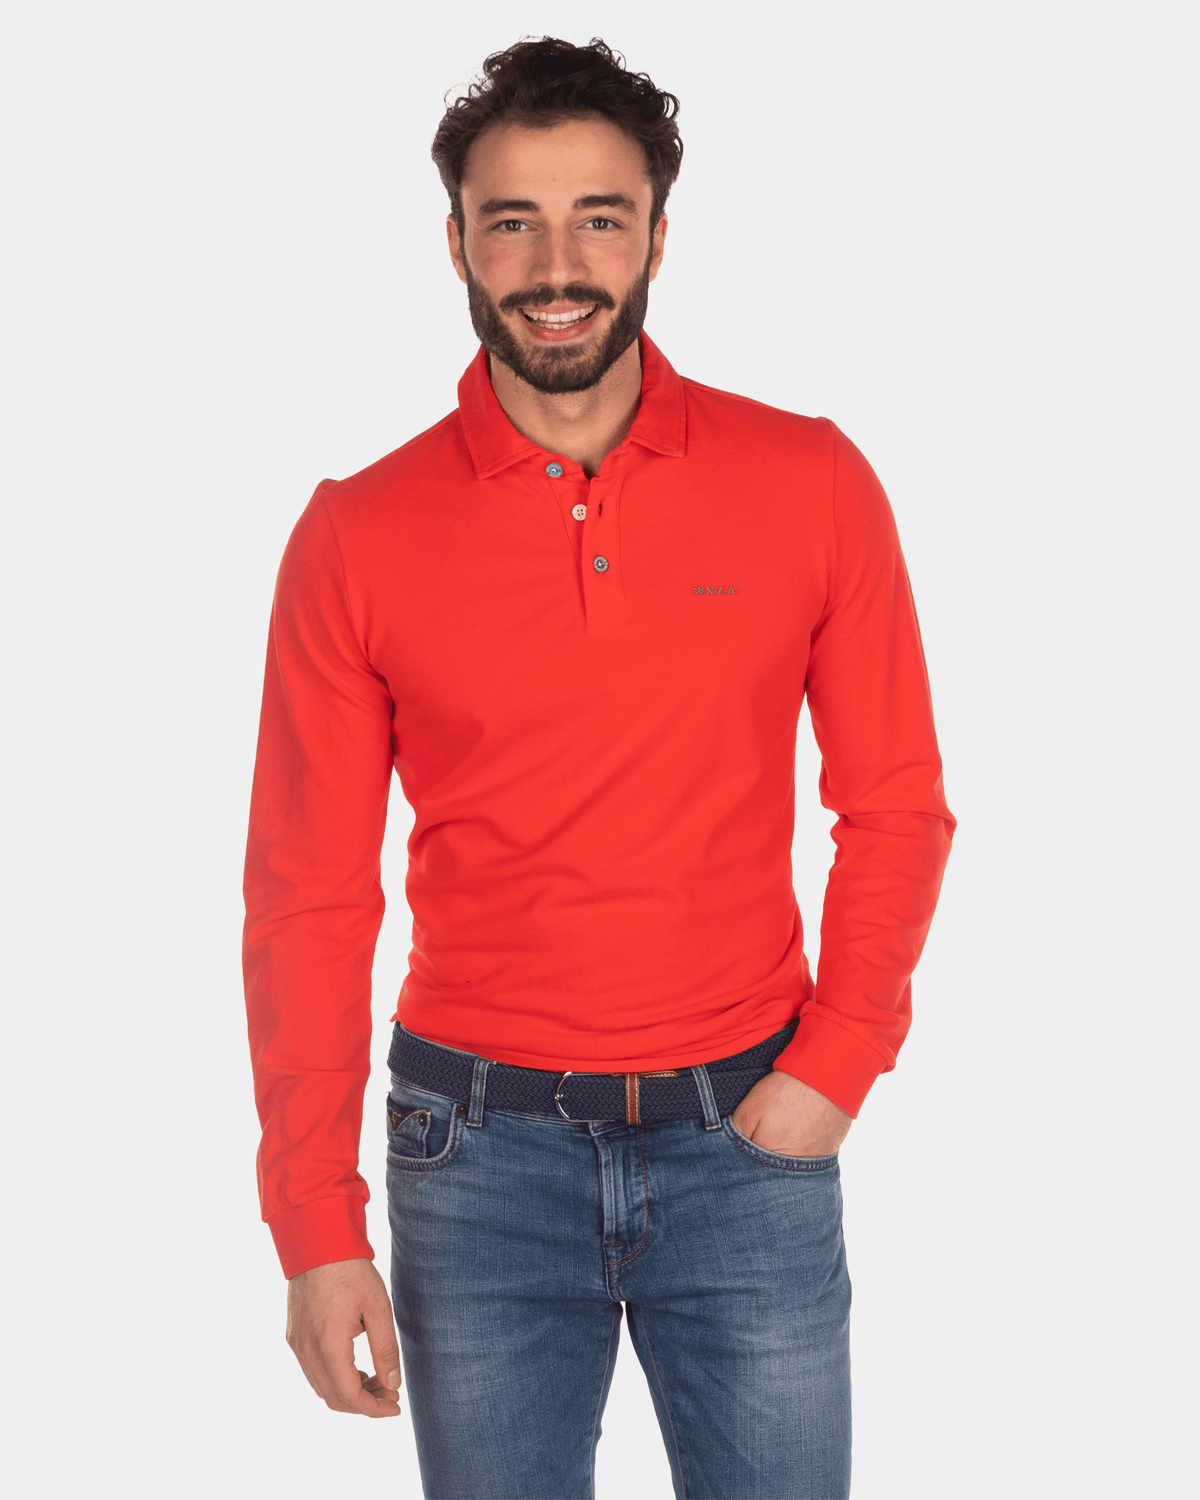 Camiseta Rugby Lisa - Orange Red